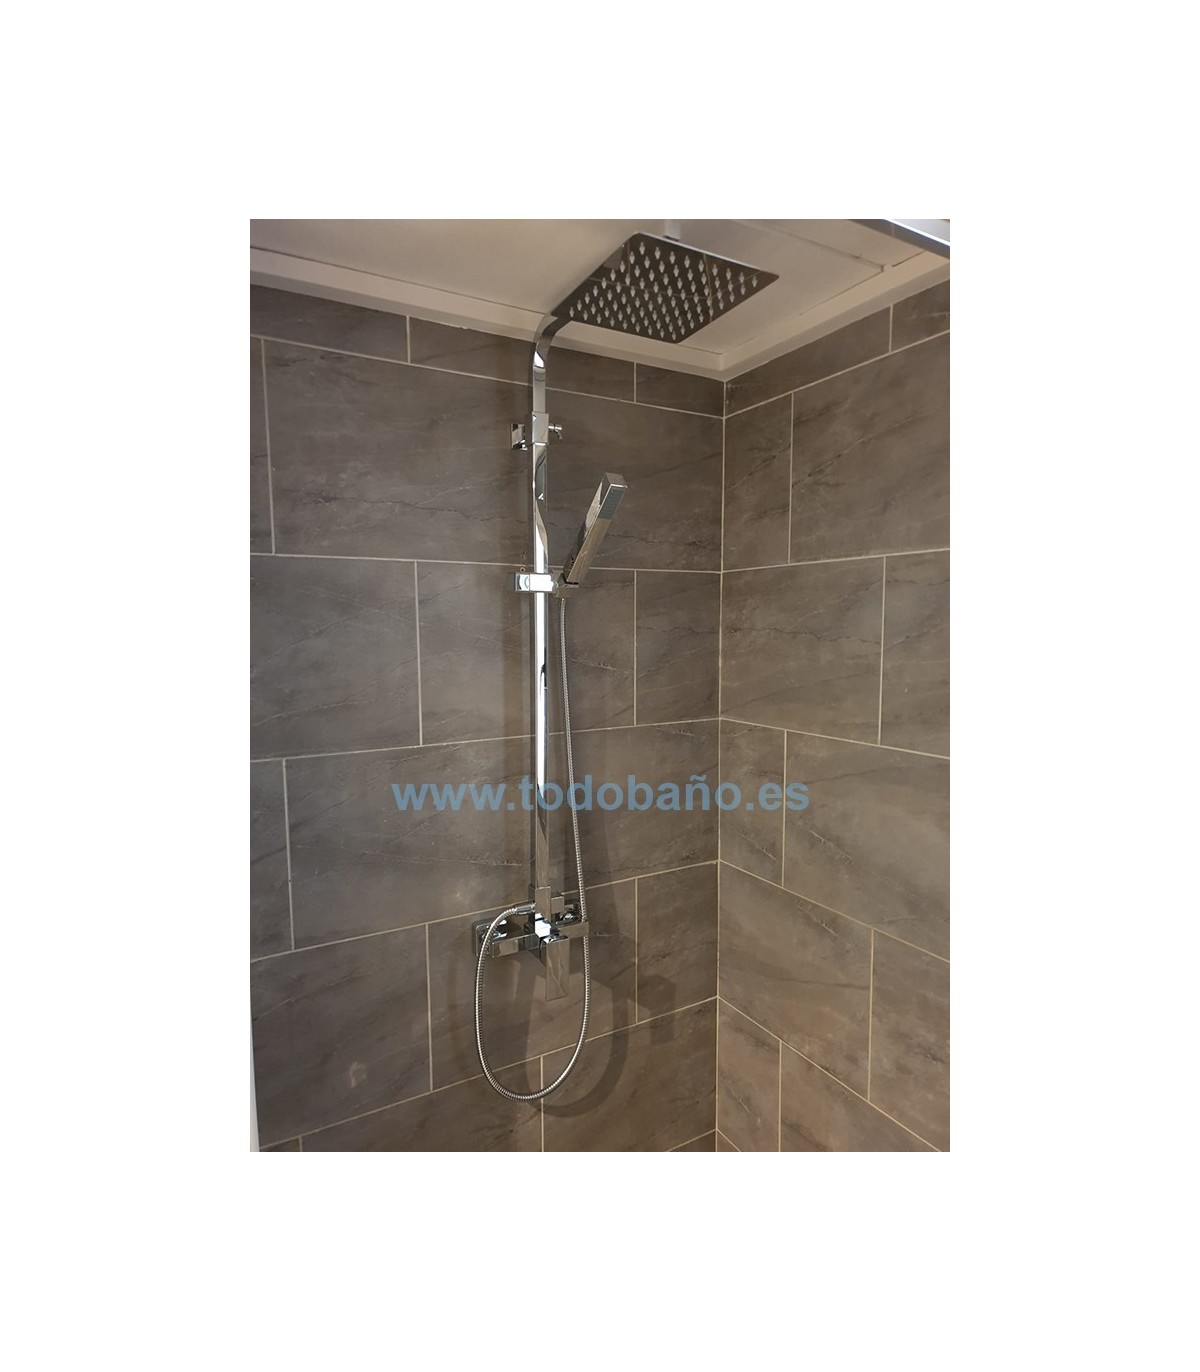 Griferia de ducha Imex Valencia - Ideal Mamparas